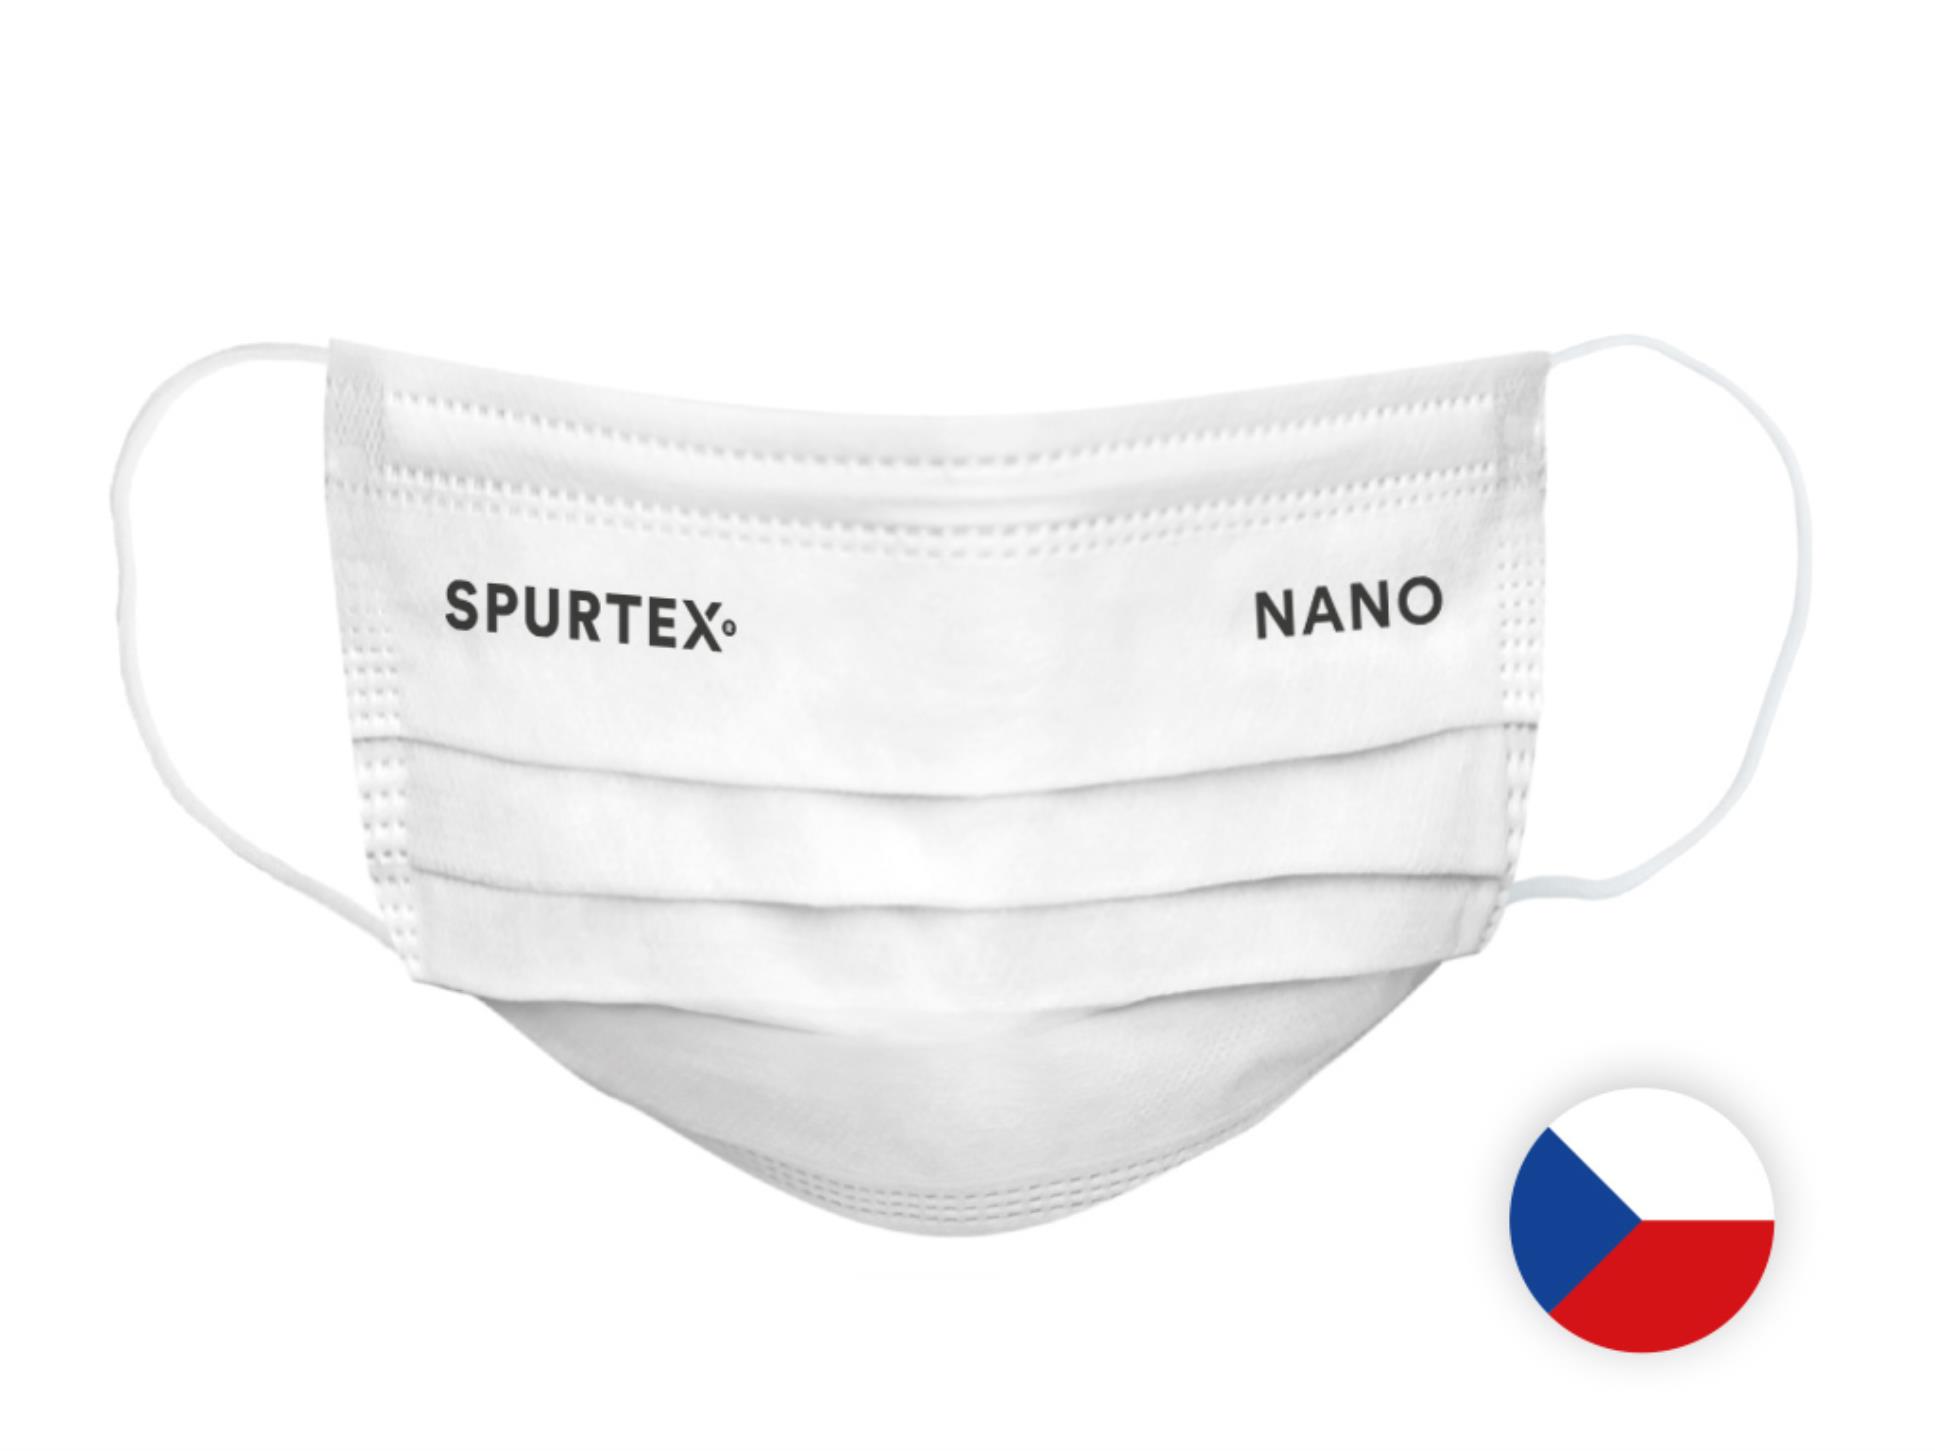 Nanorouška SpurTex - 5vrstvá